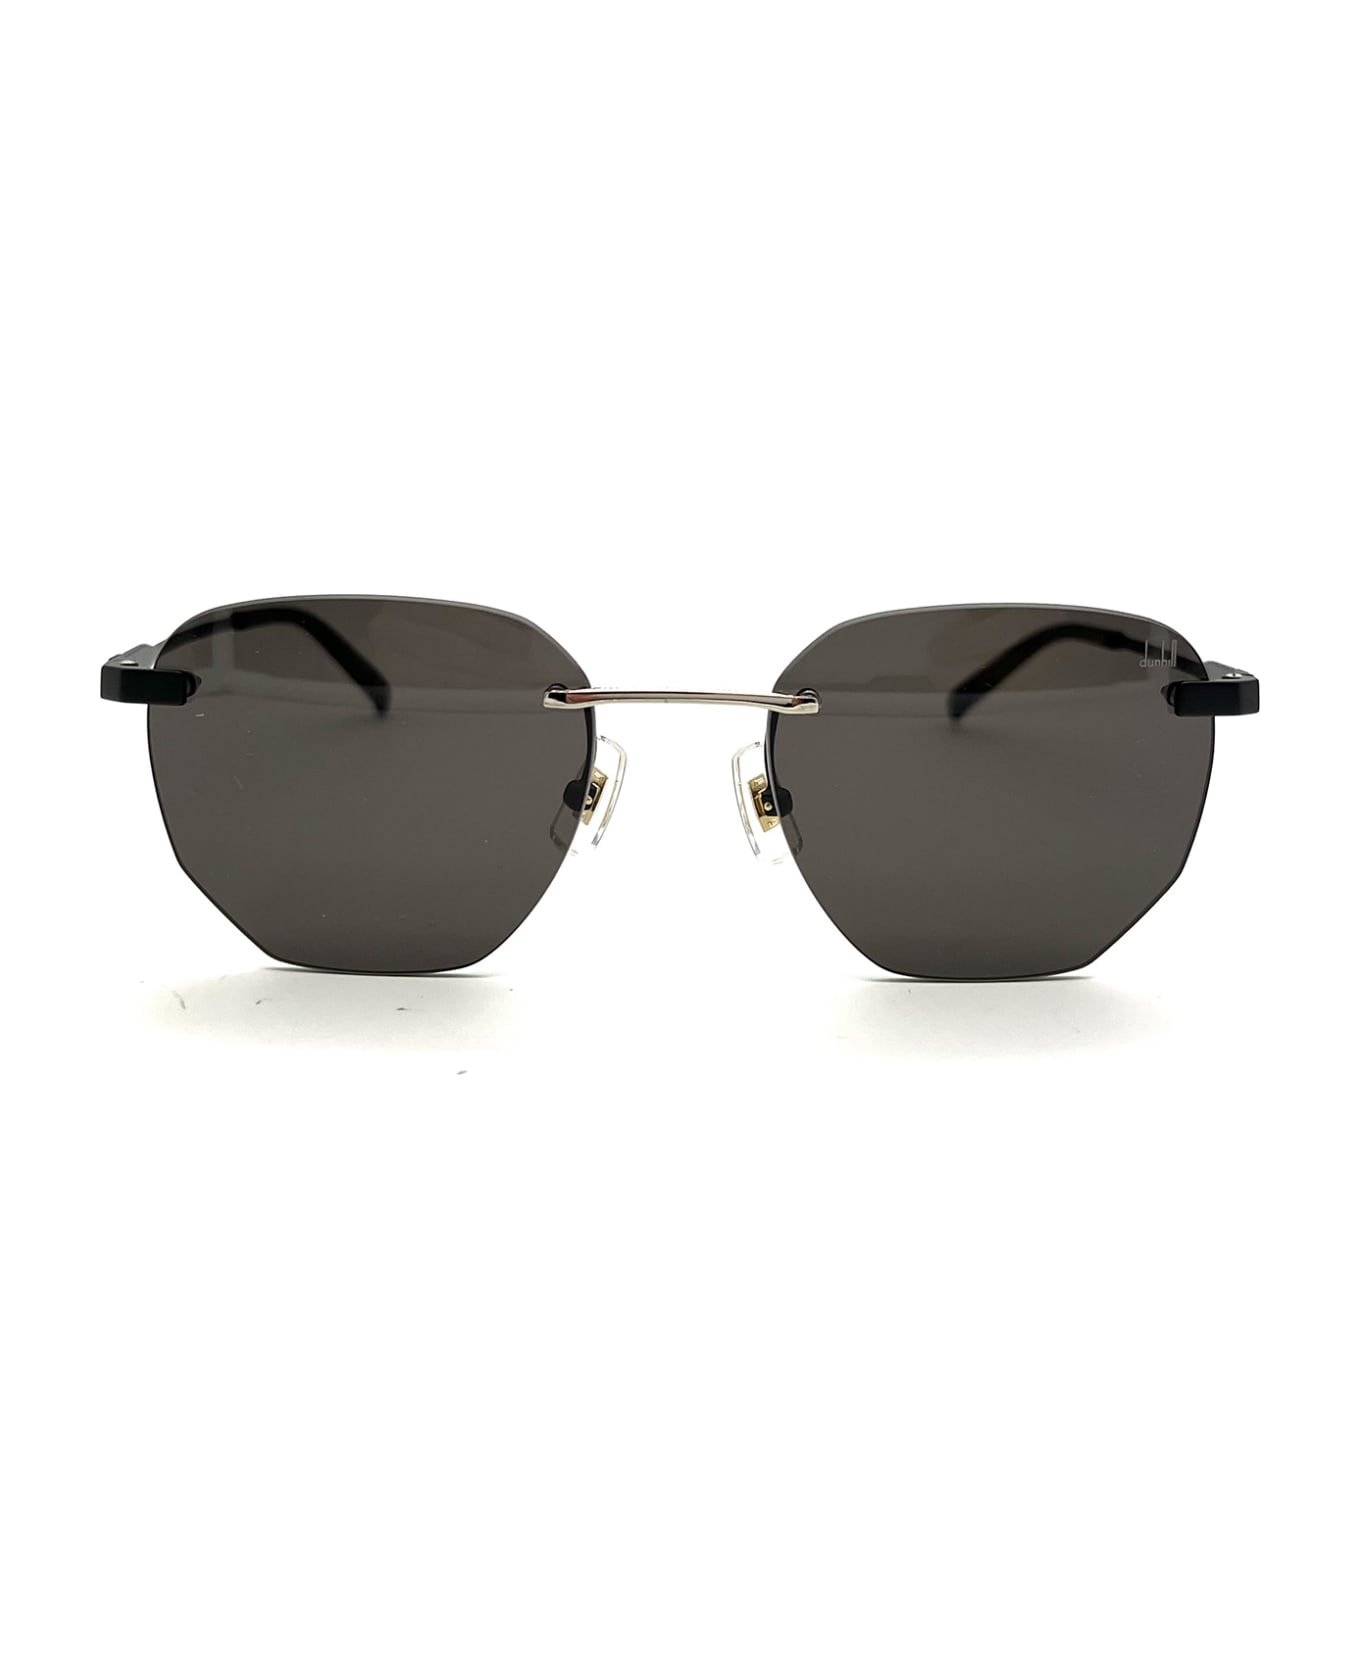 Dunhill DU0066S Sunglasses - LINDA FARROW Tortoiseshell Nieve Sunglasses